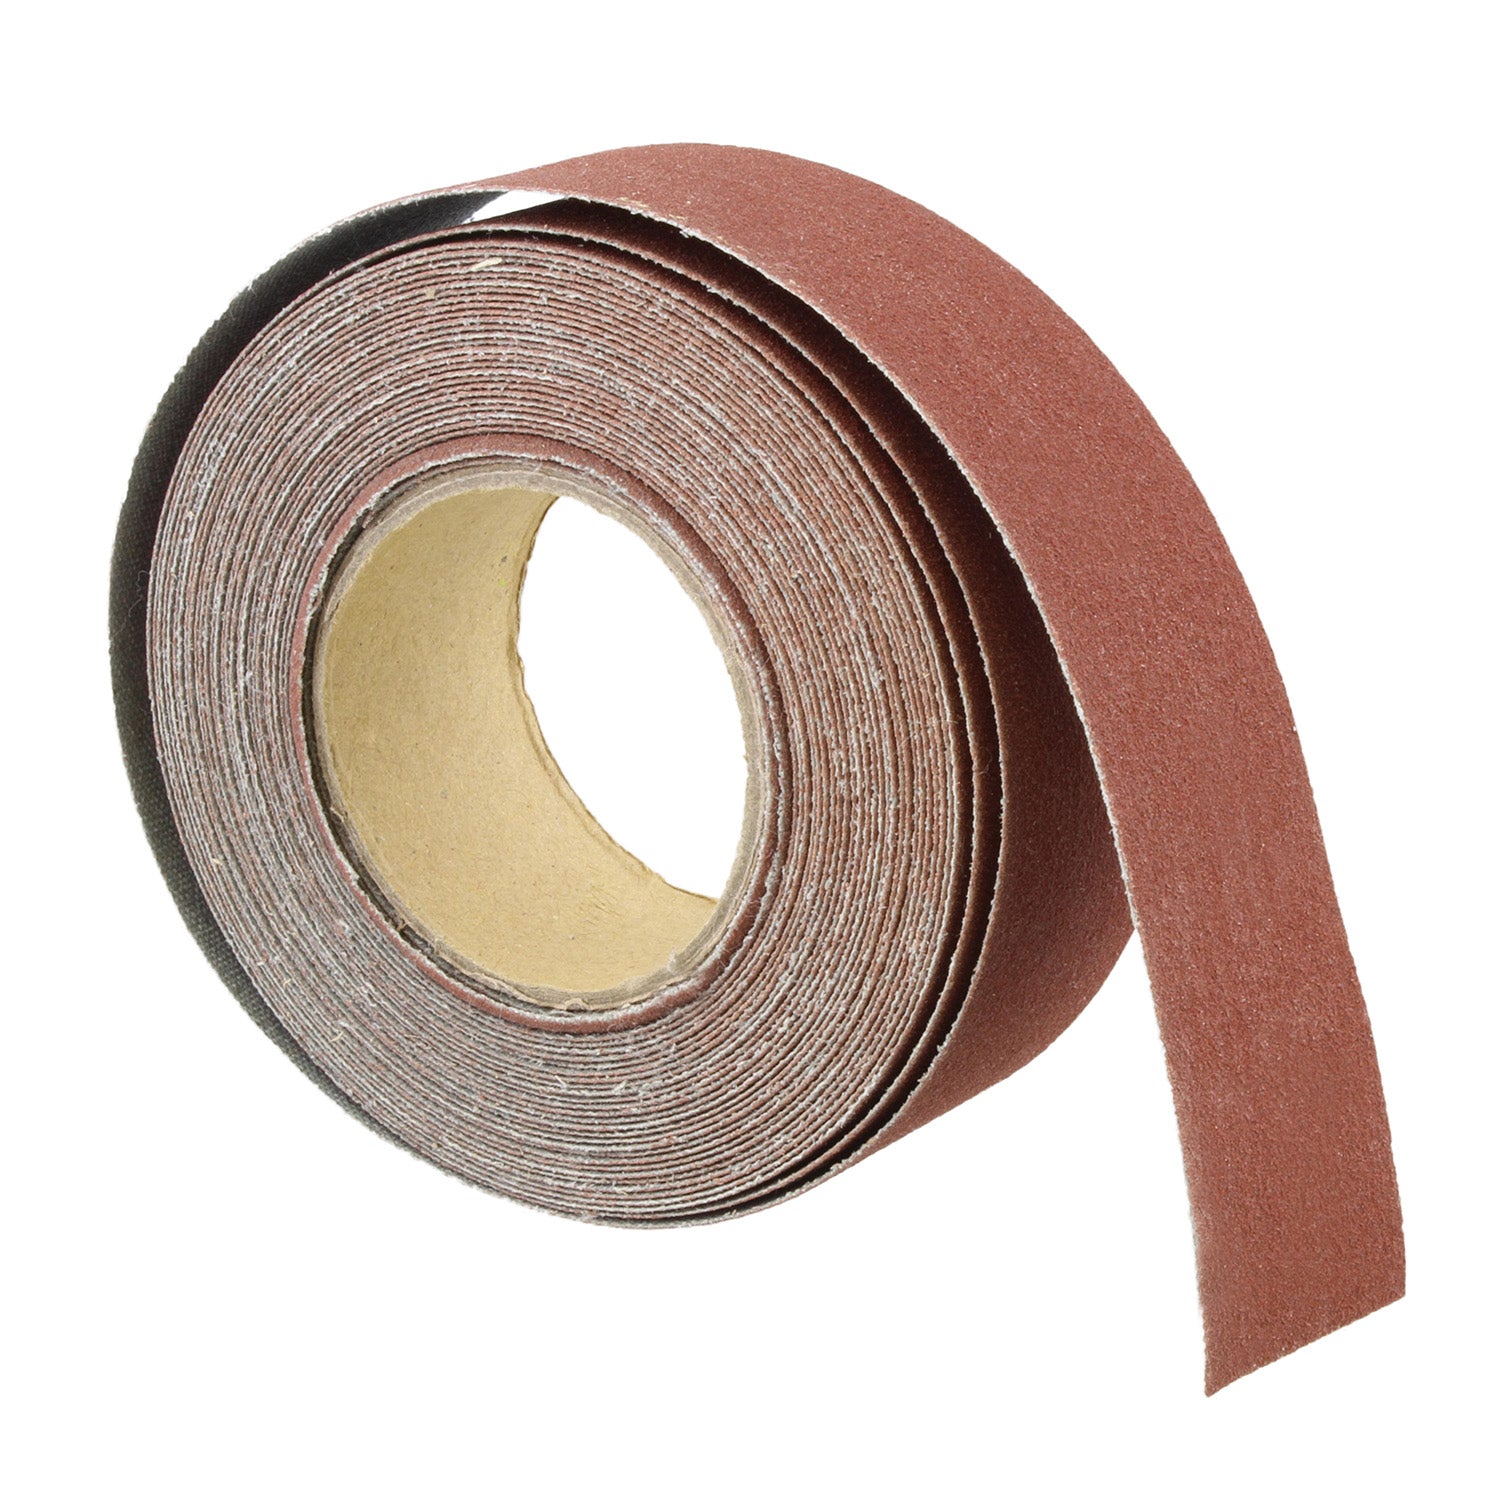 Automotive Sand Paper Abrasive Paper Sandpaper for Wood 240 Grit Roll